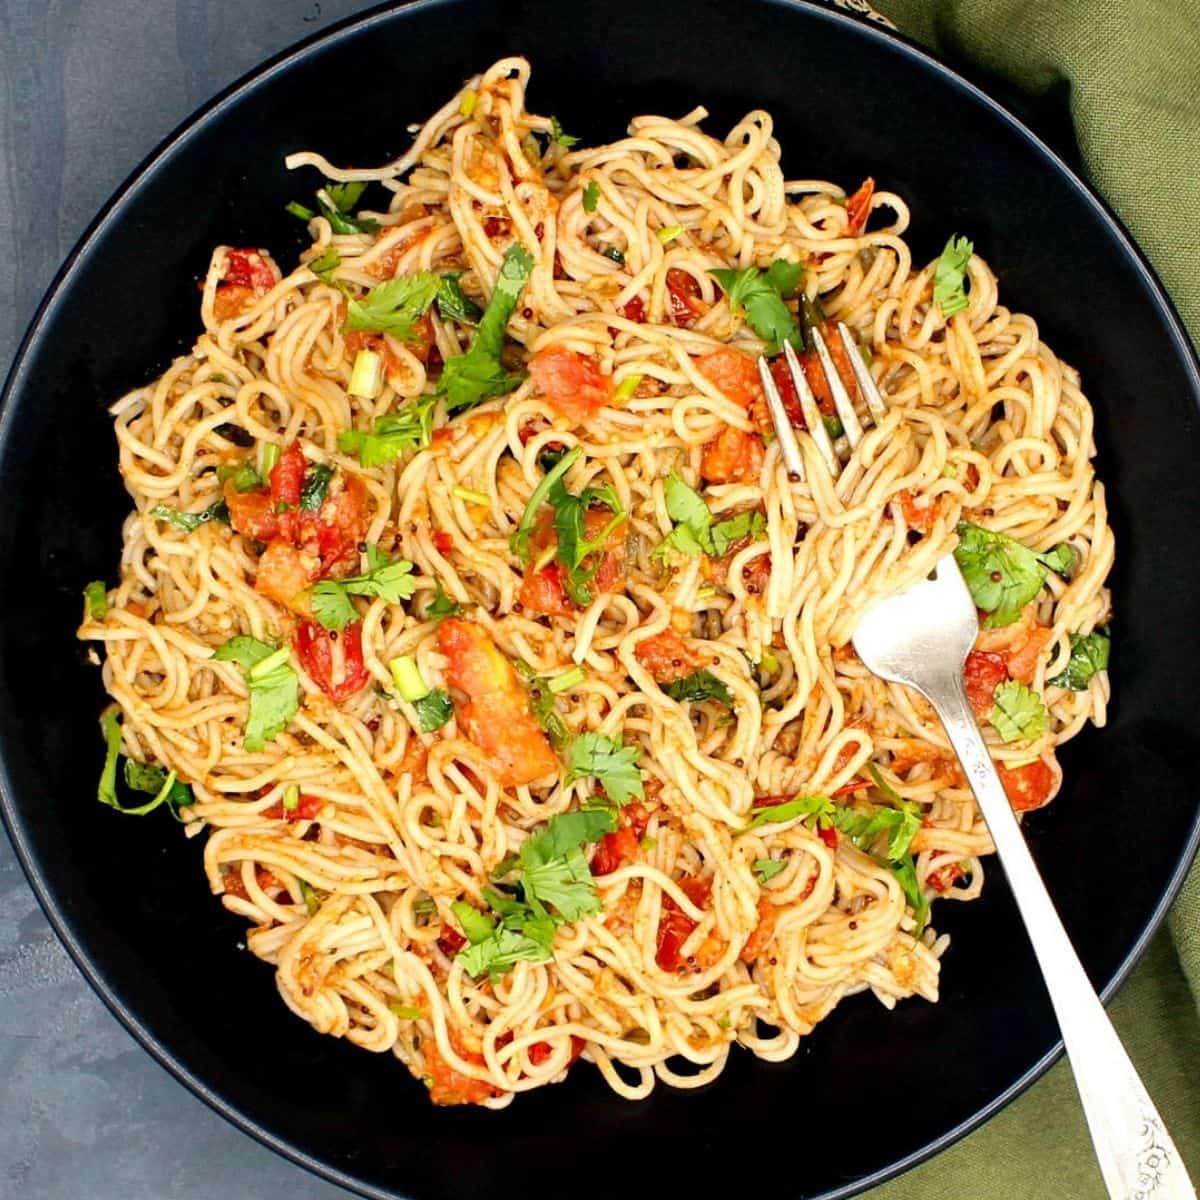 Husband divorces wife for prepared noodles for all meals